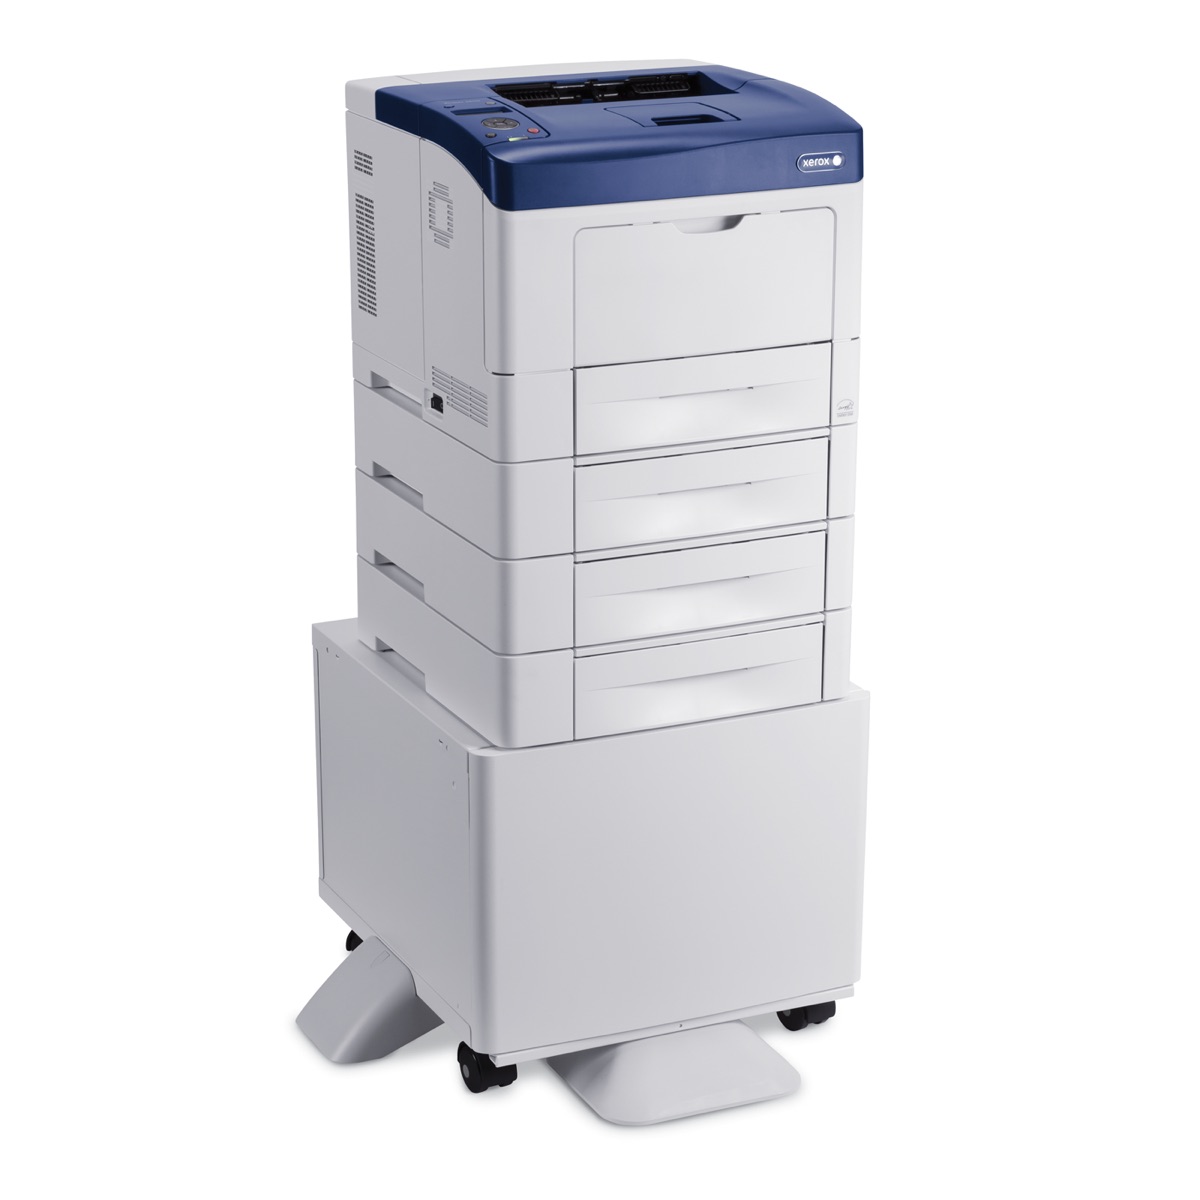 Xerox Printers:  The Xerox Phaser 3610DN Printer